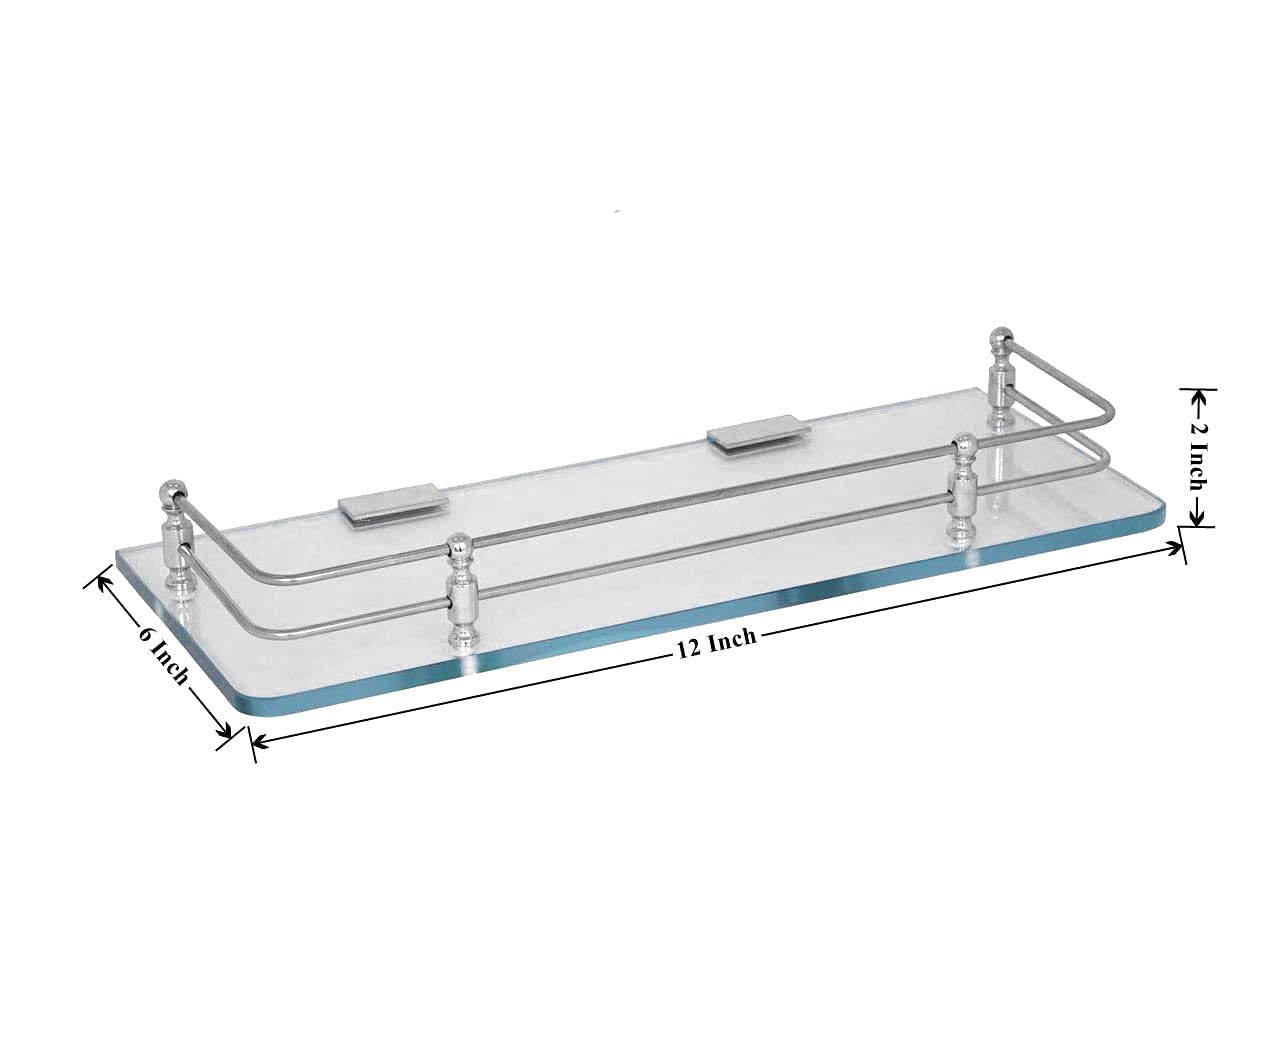 Plantex Premium Transparent Glass Shelf for Bathroom/Kitchen/Living Room - Bathroom Accessories (Polished 12x6 - Pack of 2)